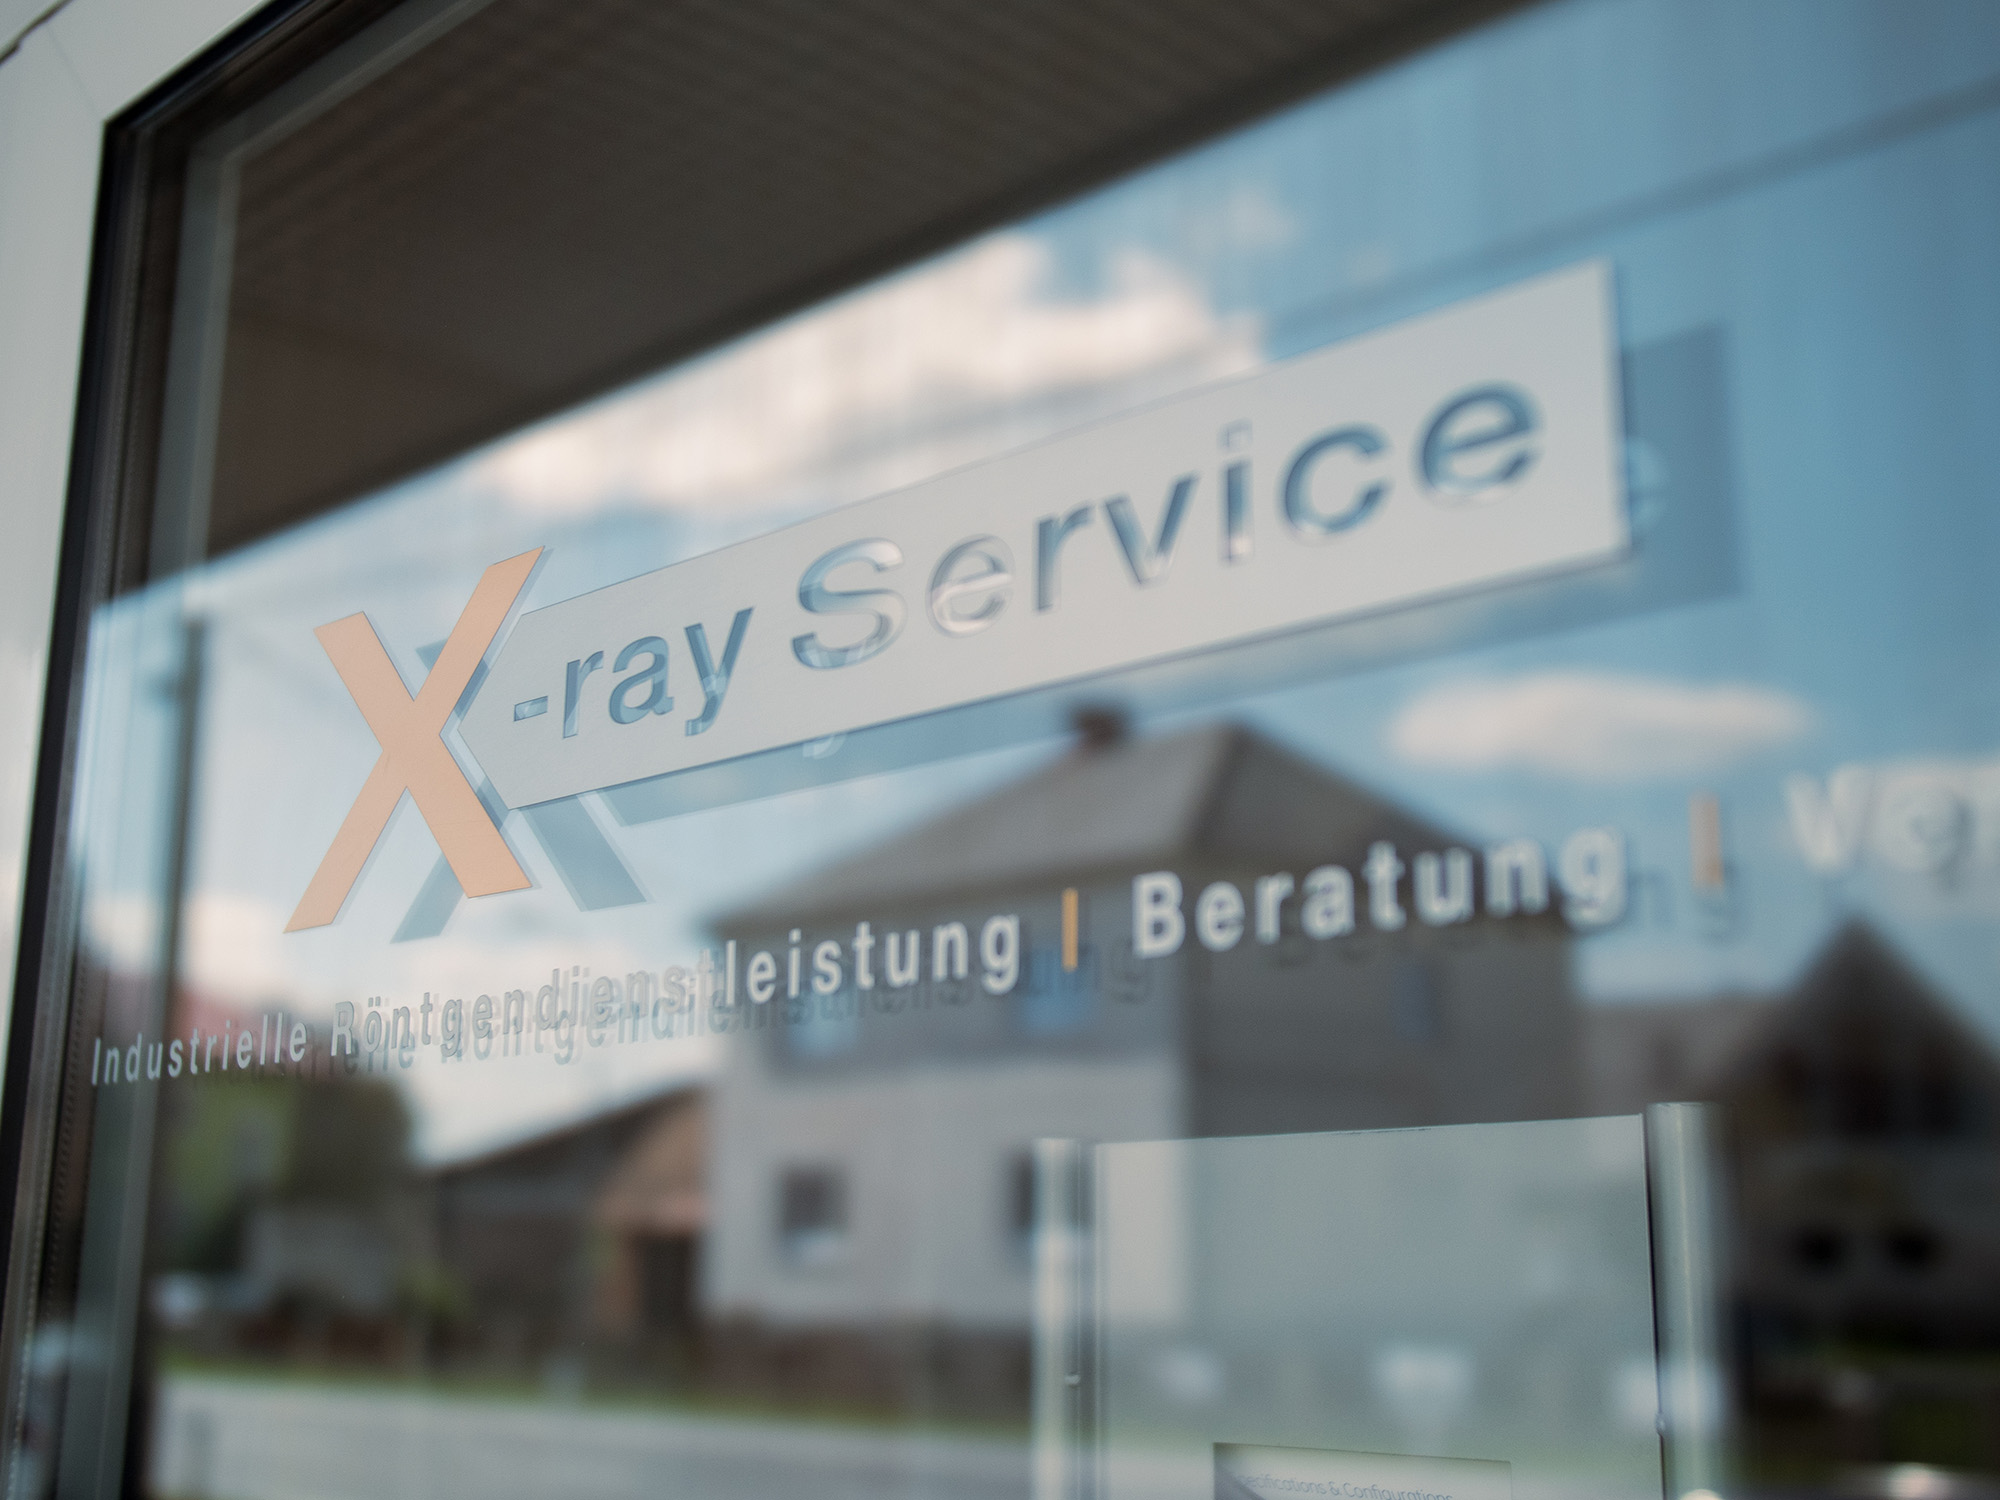 X-ray Service GmbH